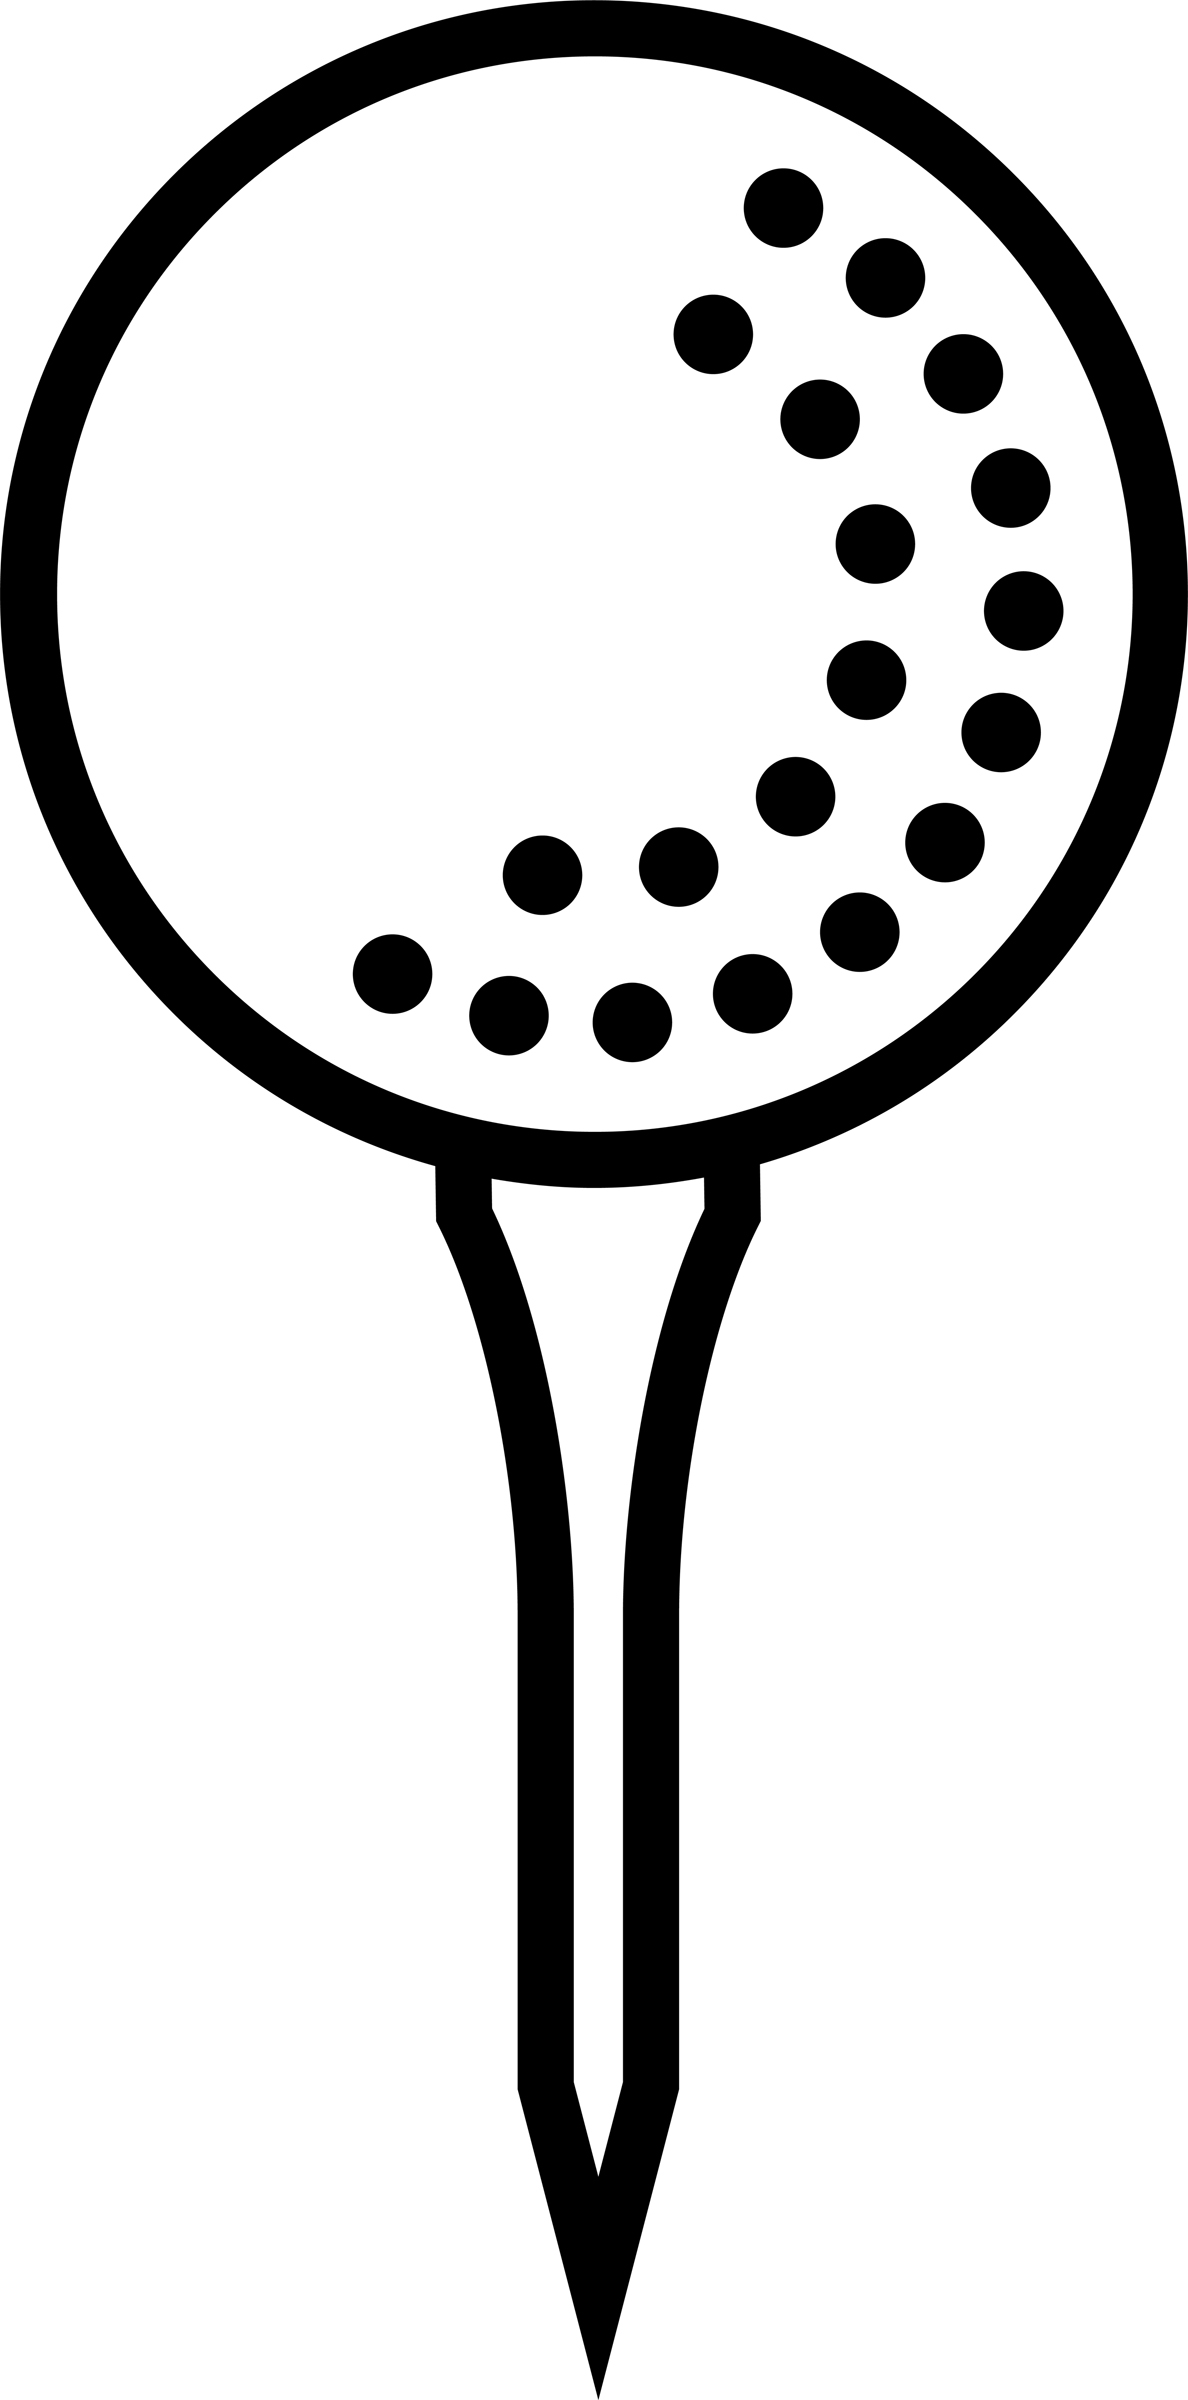 golf ball clip art free download - photo #48